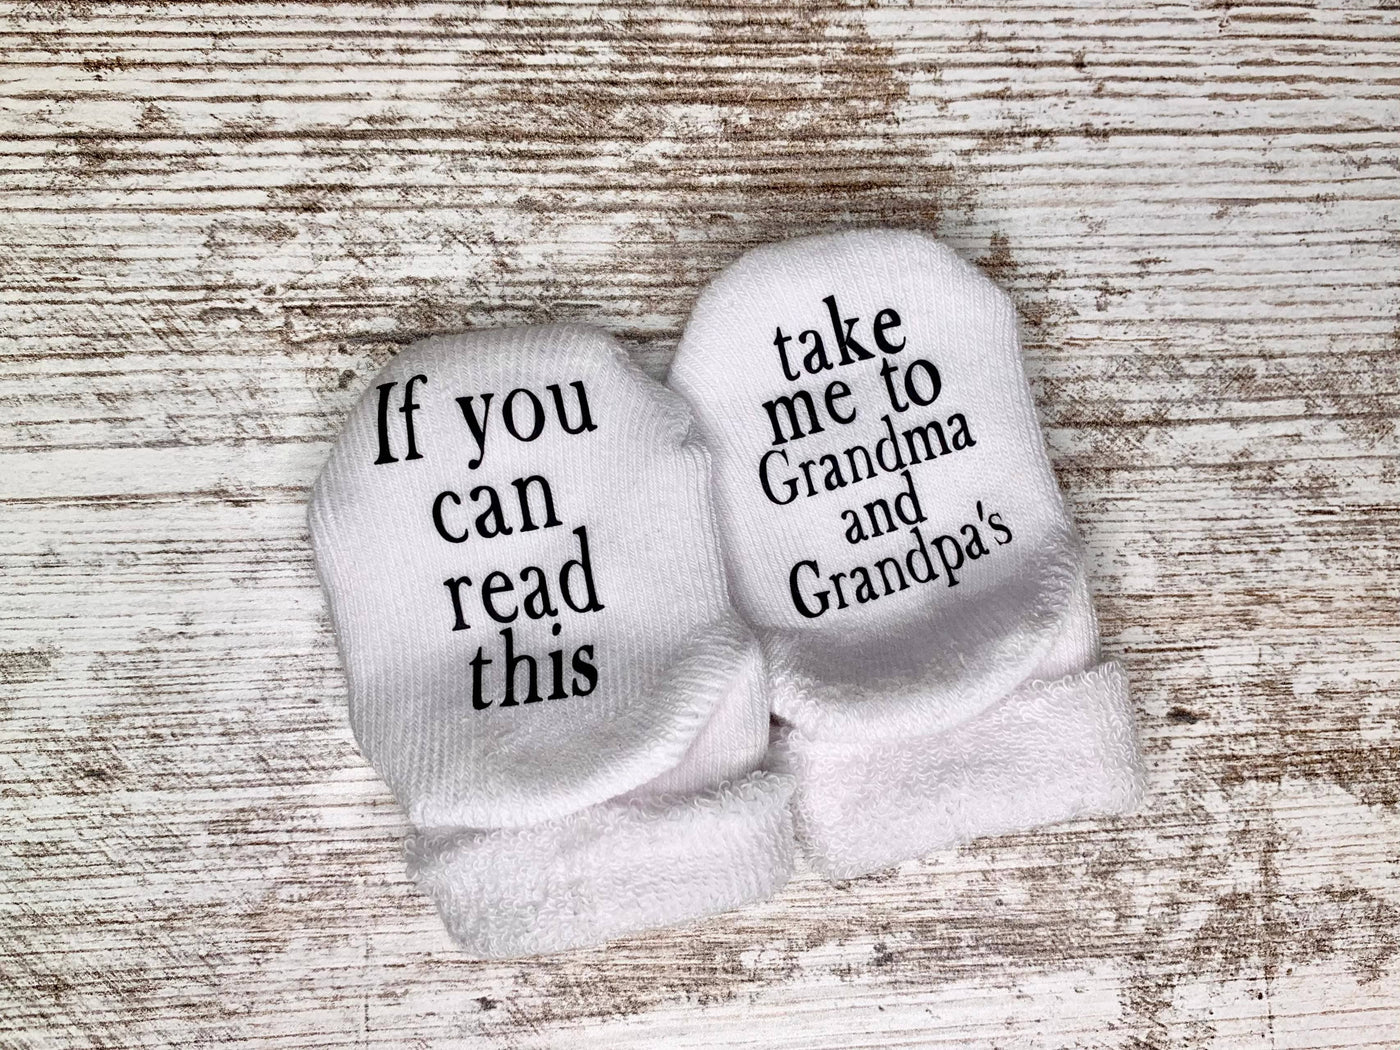 Take Me to Grandma and Grandpas Baby Socks